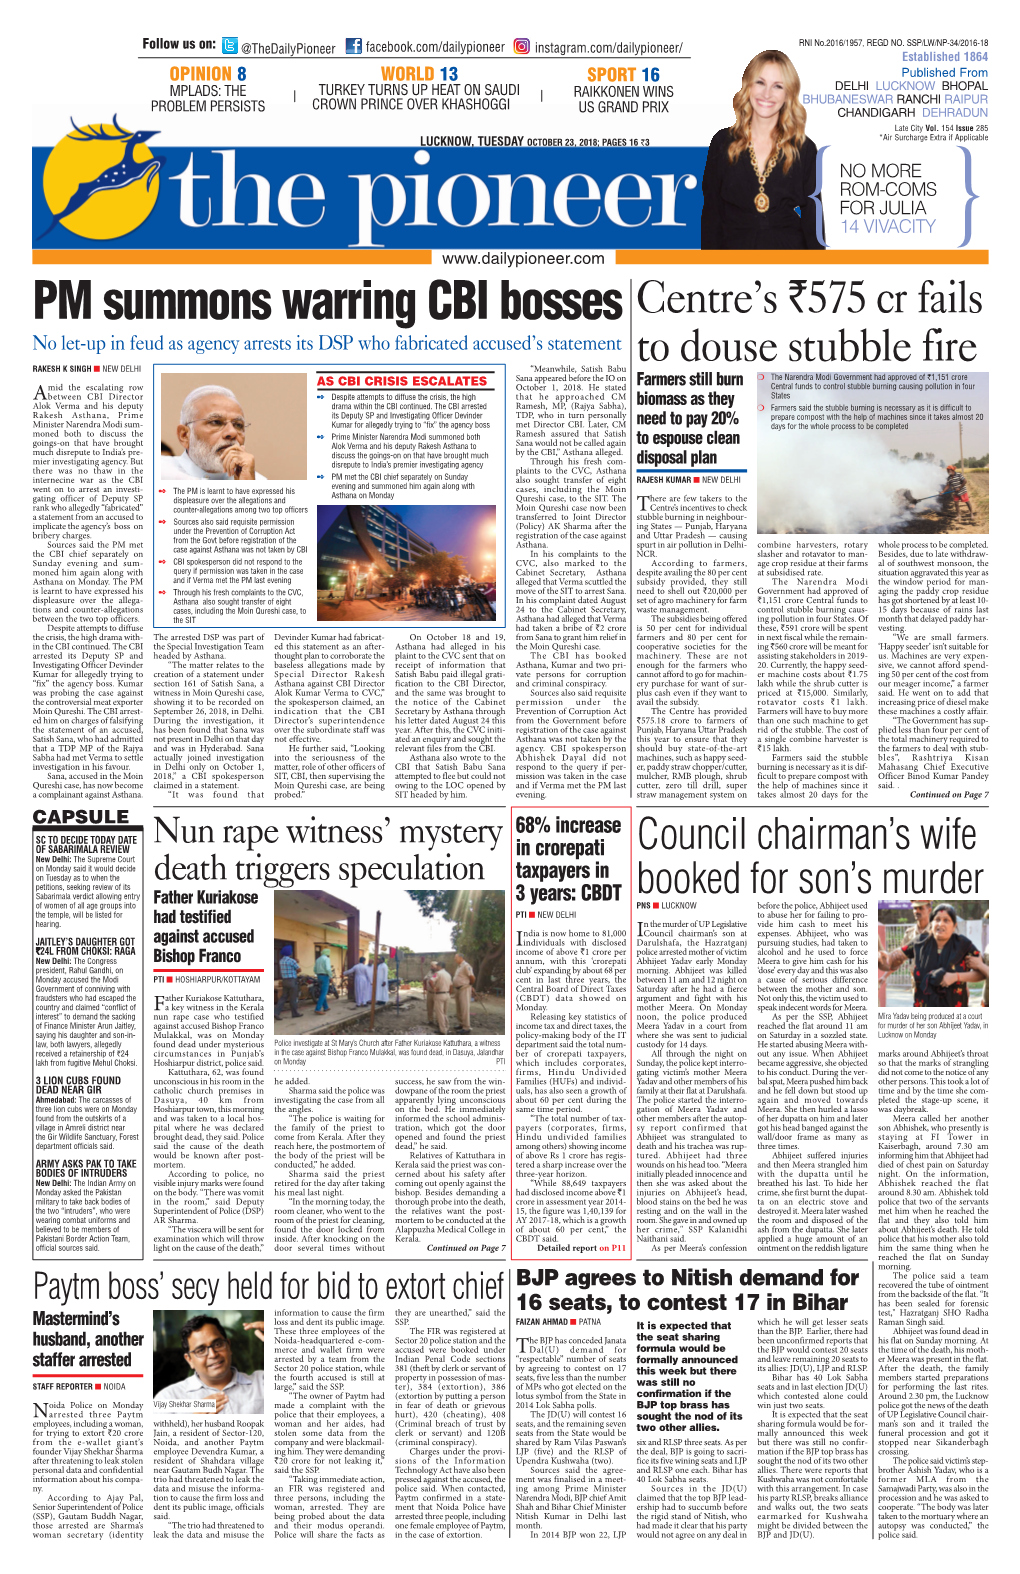 PM Summons Warring CBI Bosses